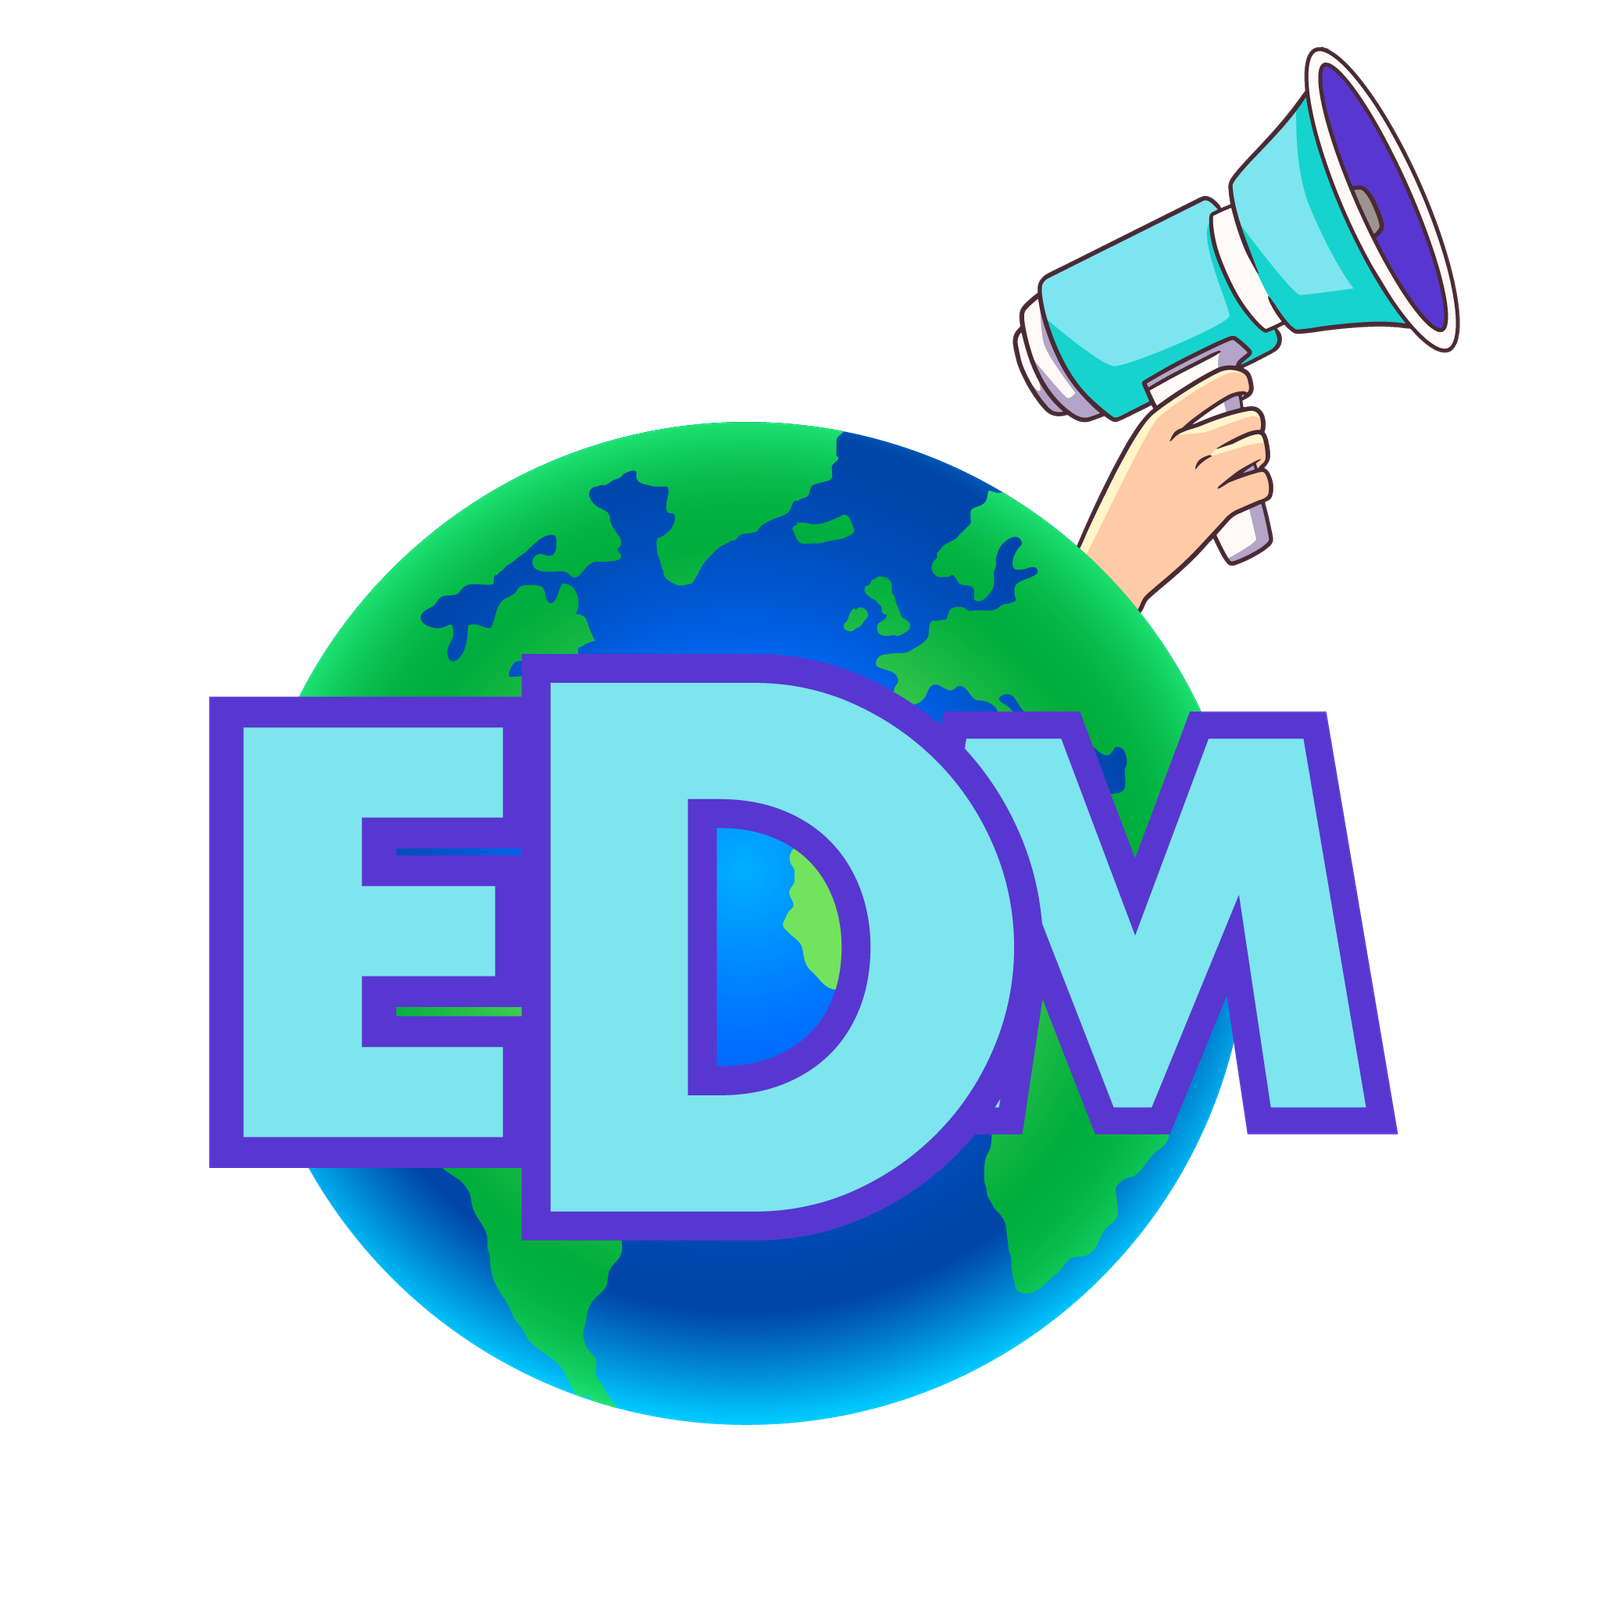 Executive Digital Marketers logo